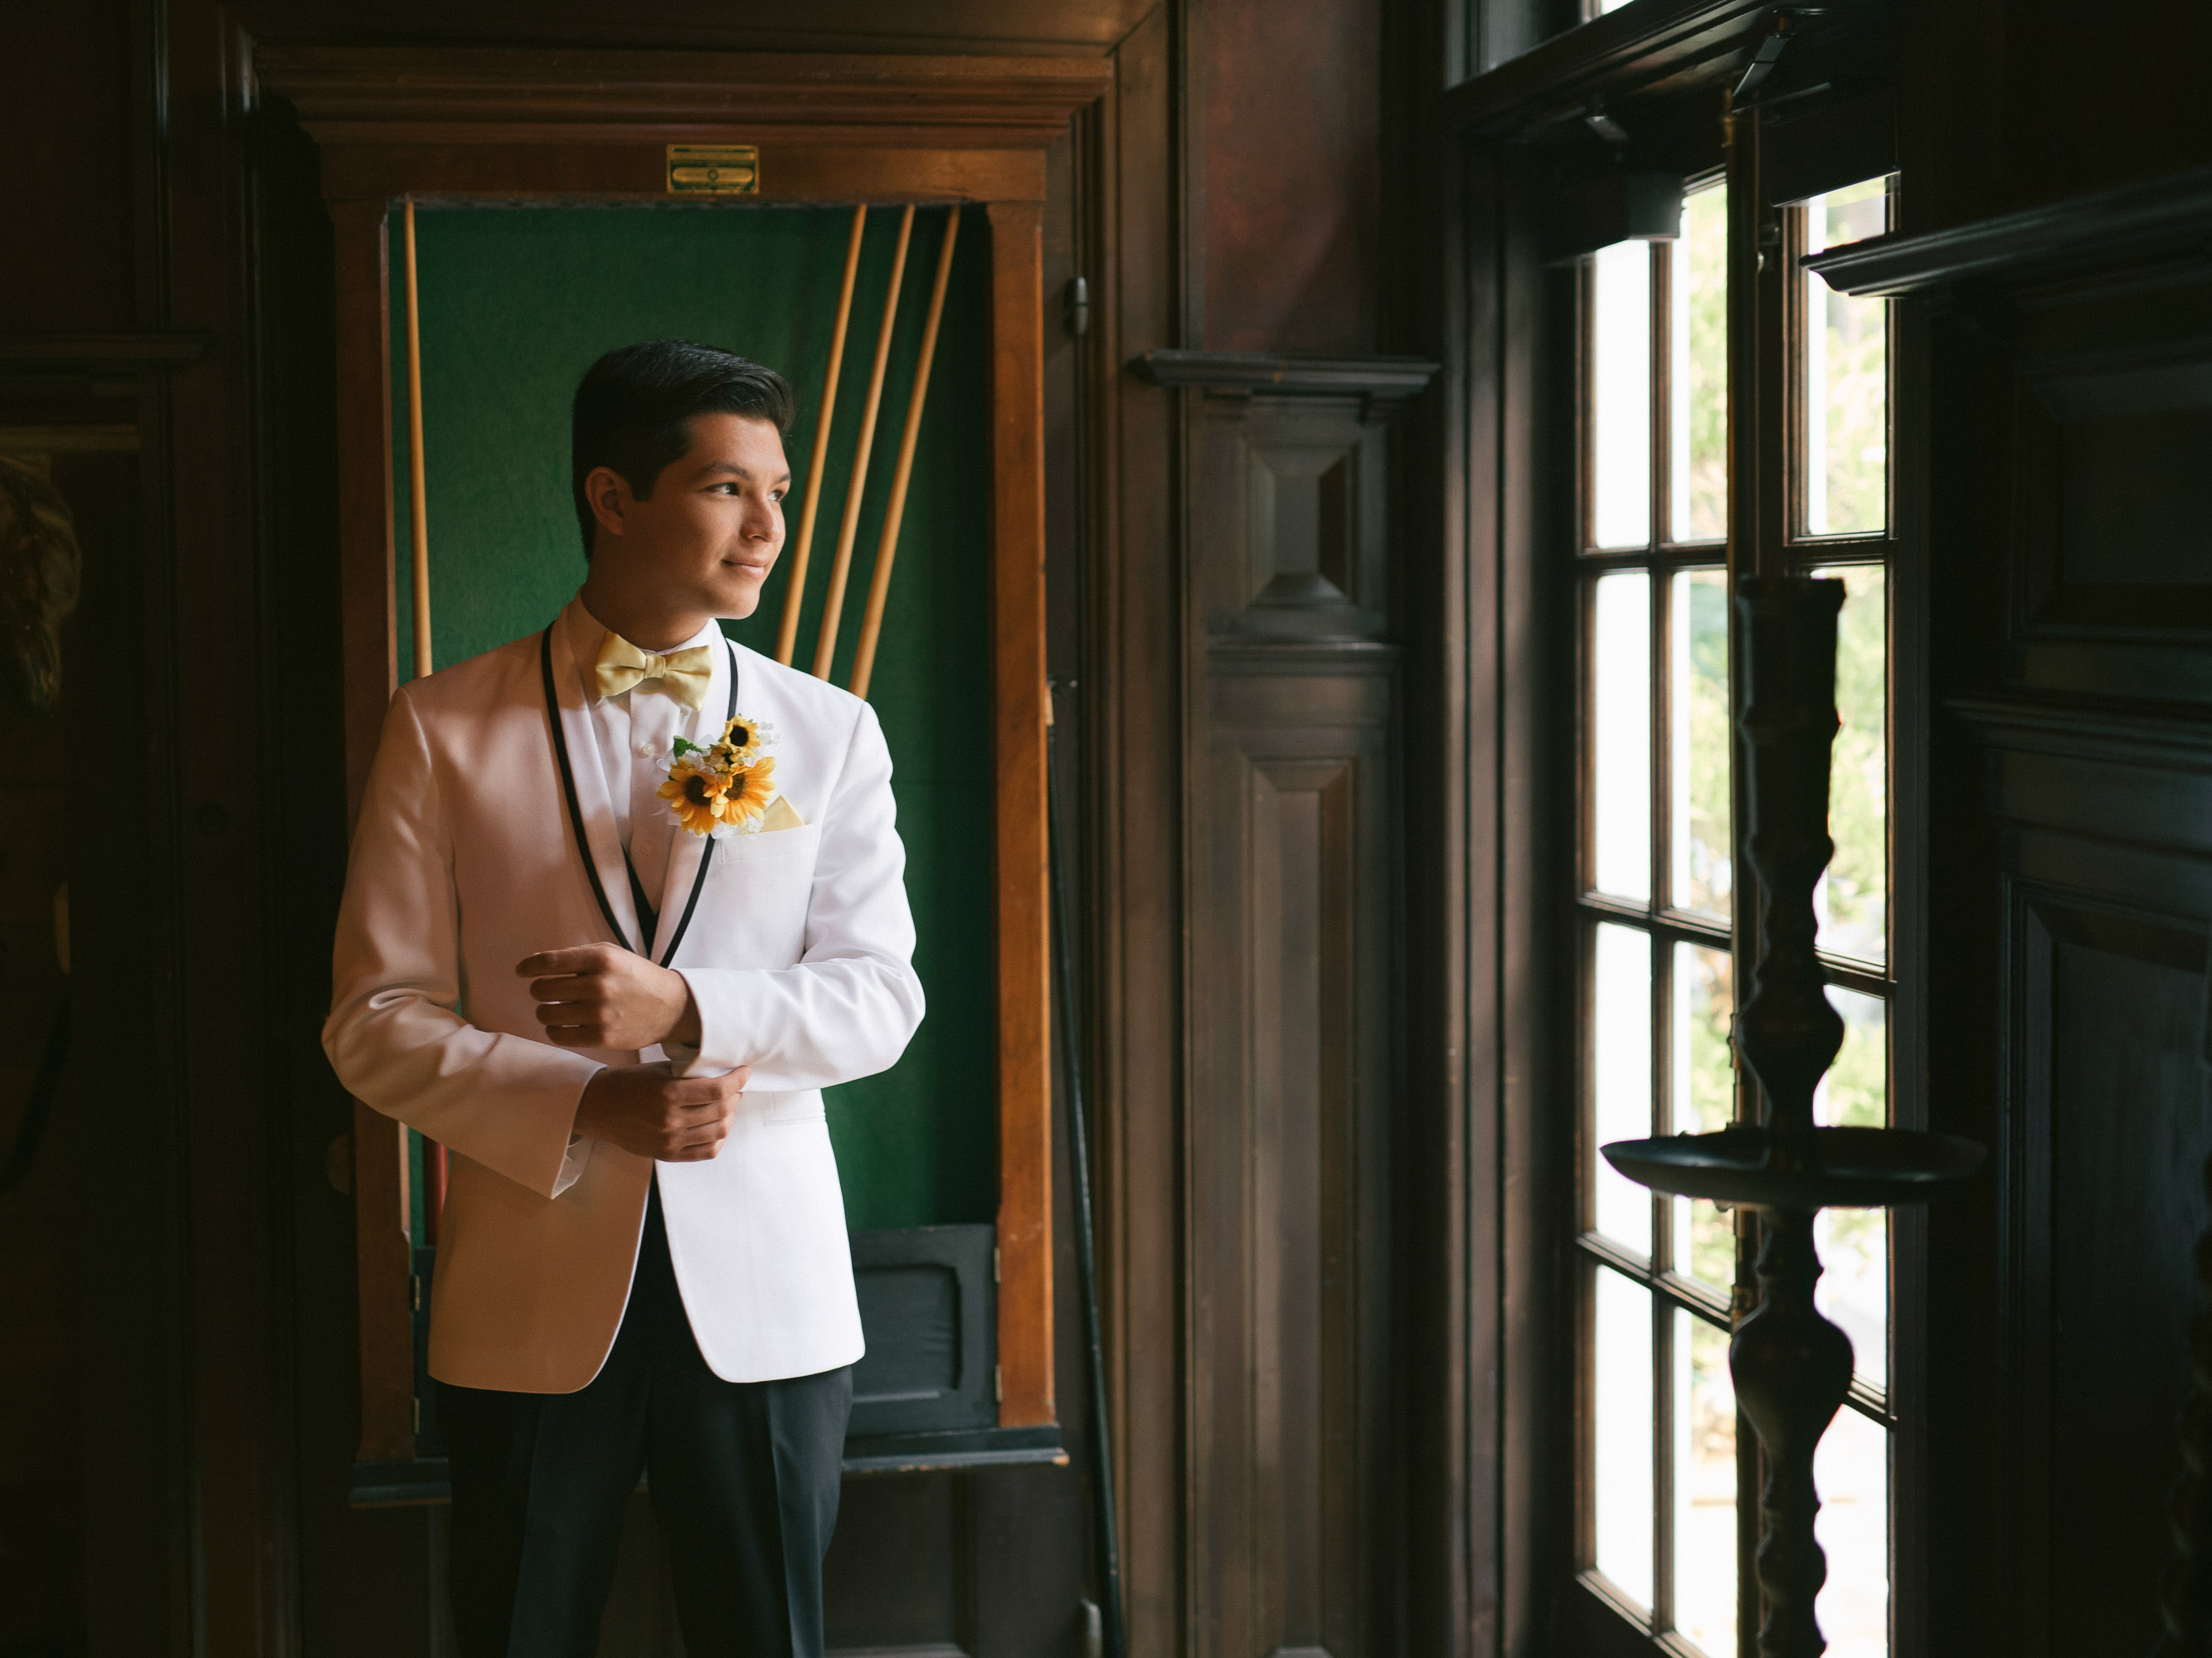 A groom in a white tuxedo standing in a doorway.